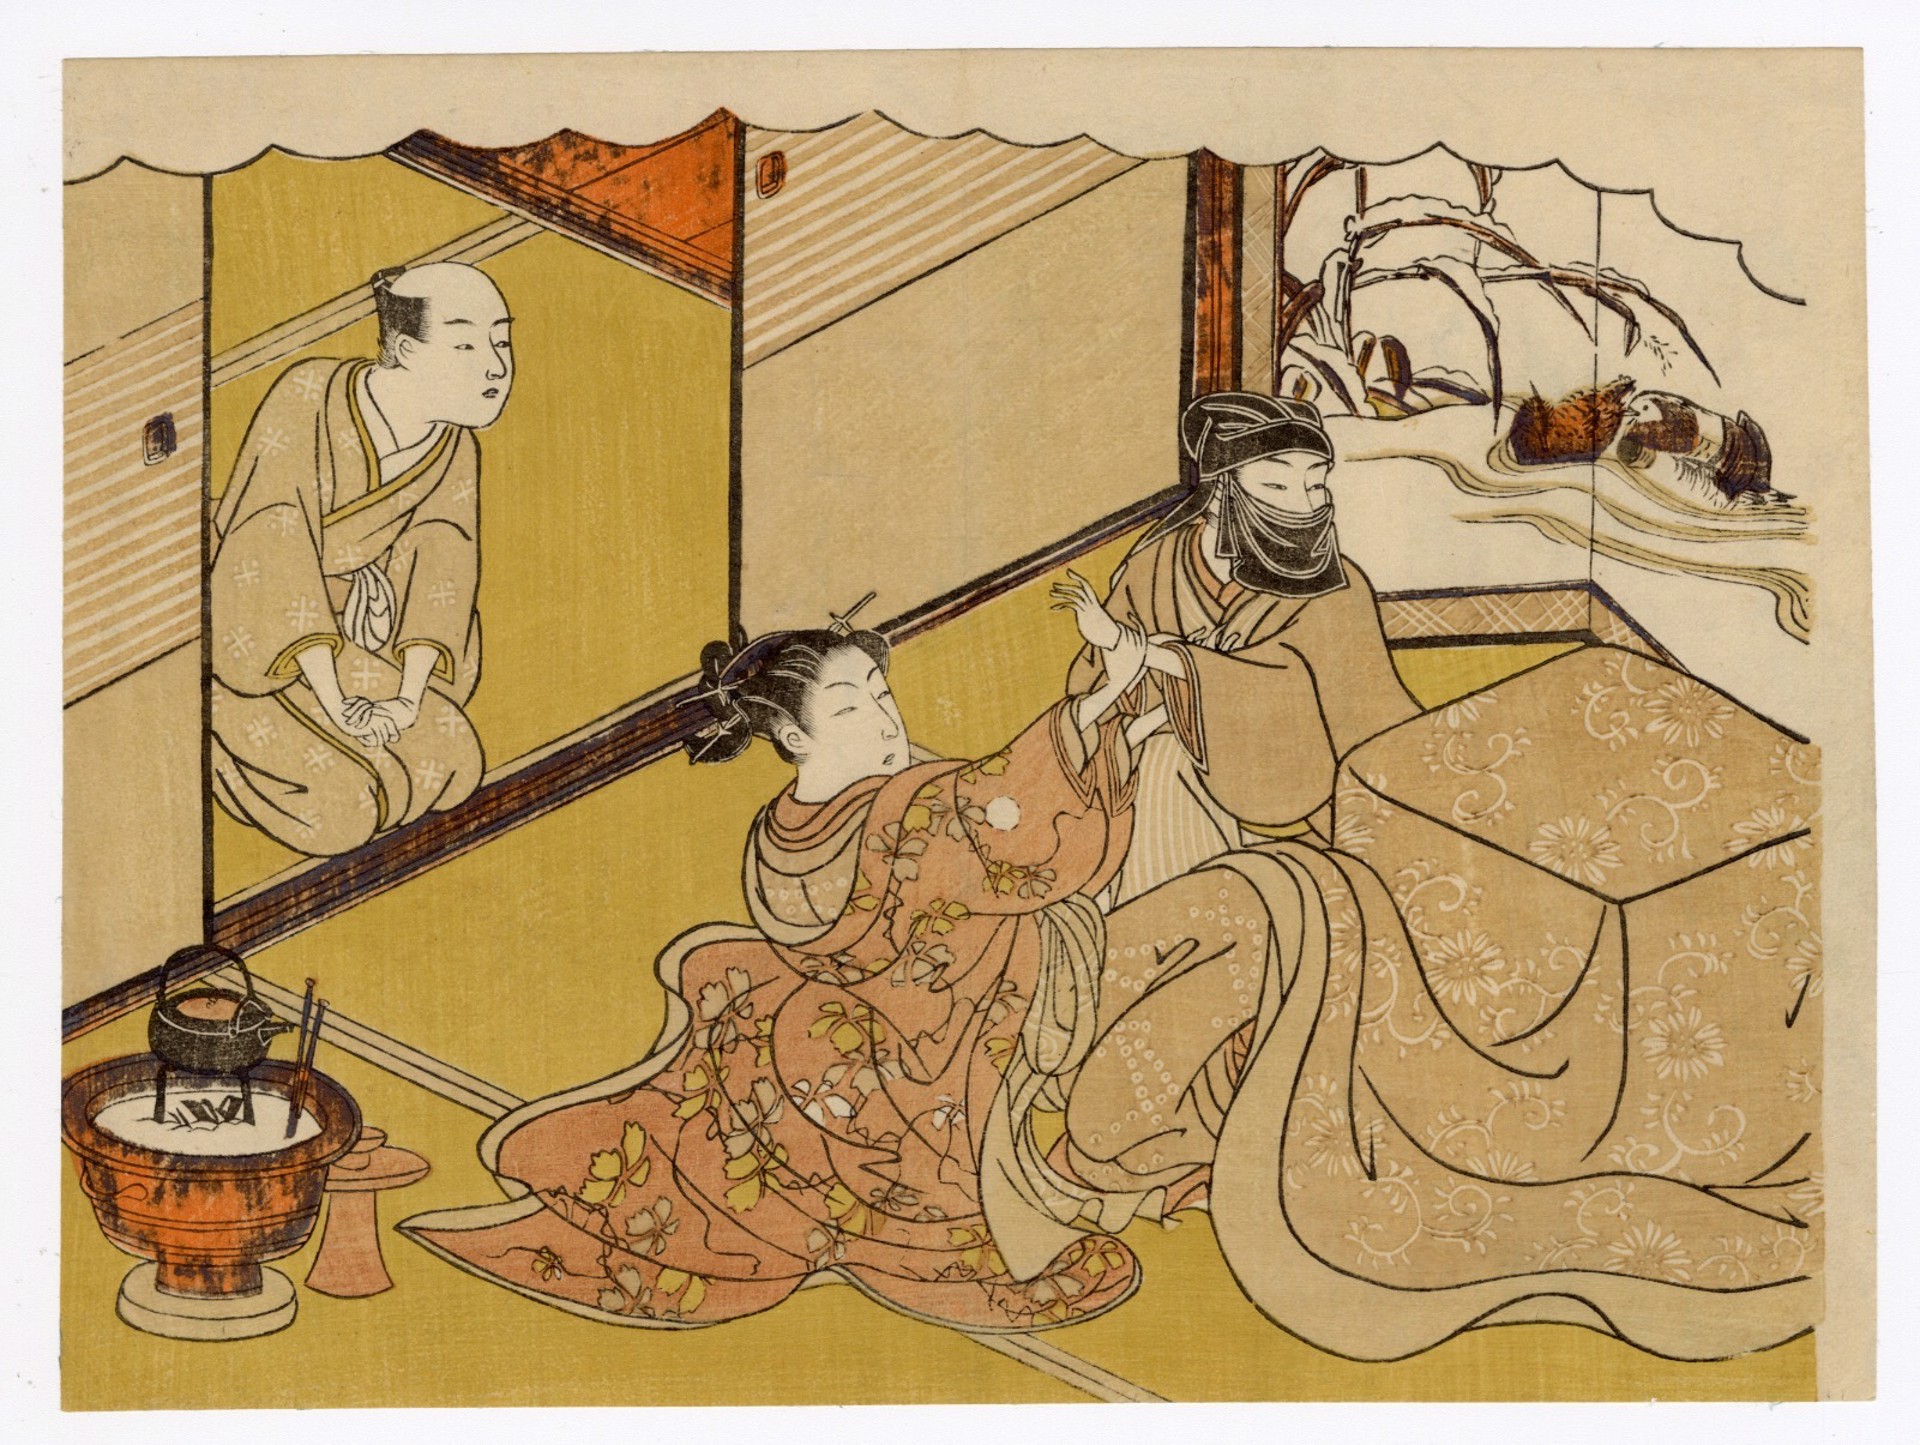 A Woman, Under a Kotatsu, Fighting off a Masked Man as a servant Watches. by Harunobu